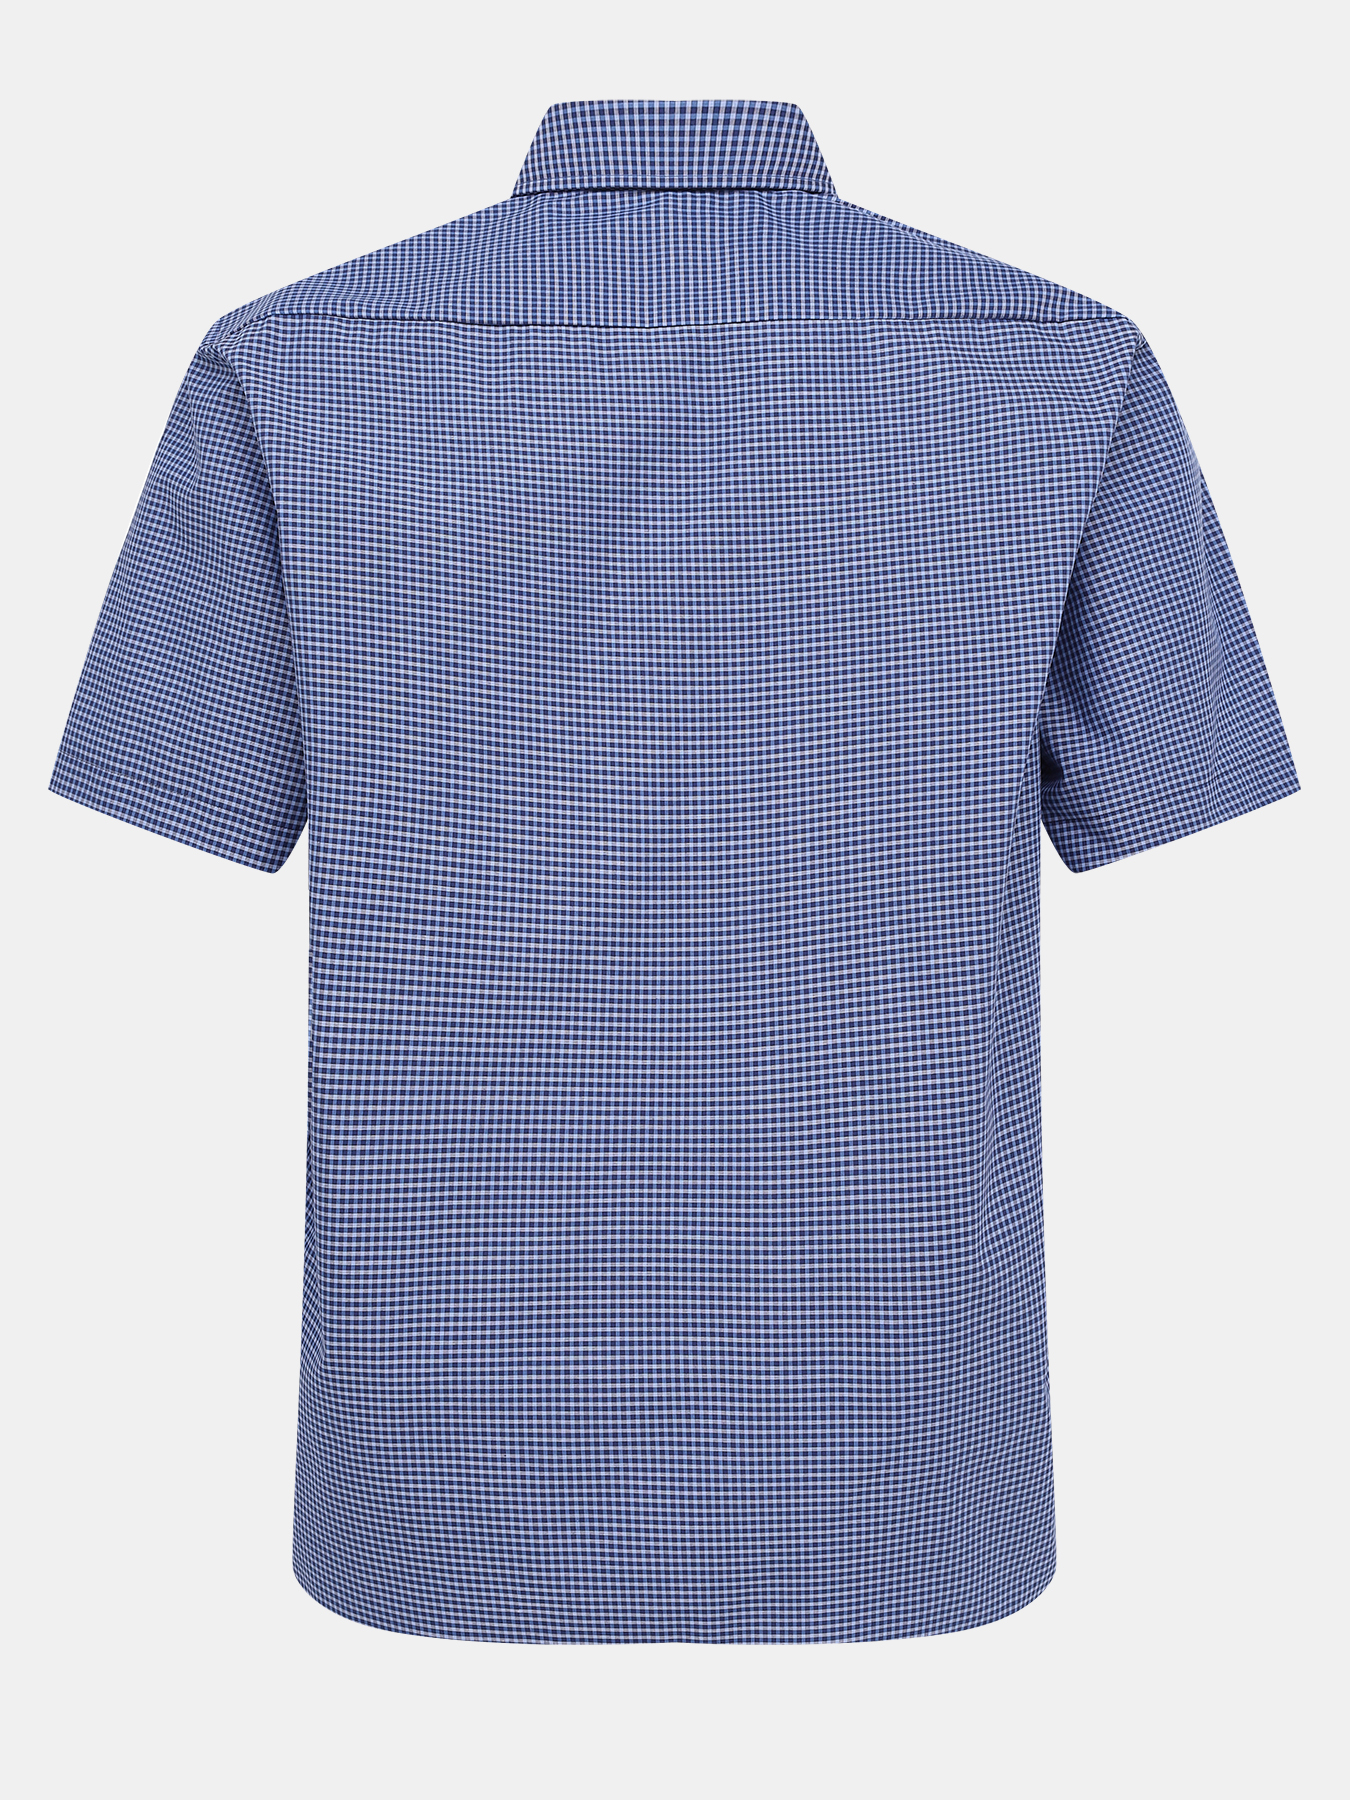 Рубашка Eterna 416186-240, цвет темно-синий, размер 64 - фото 2